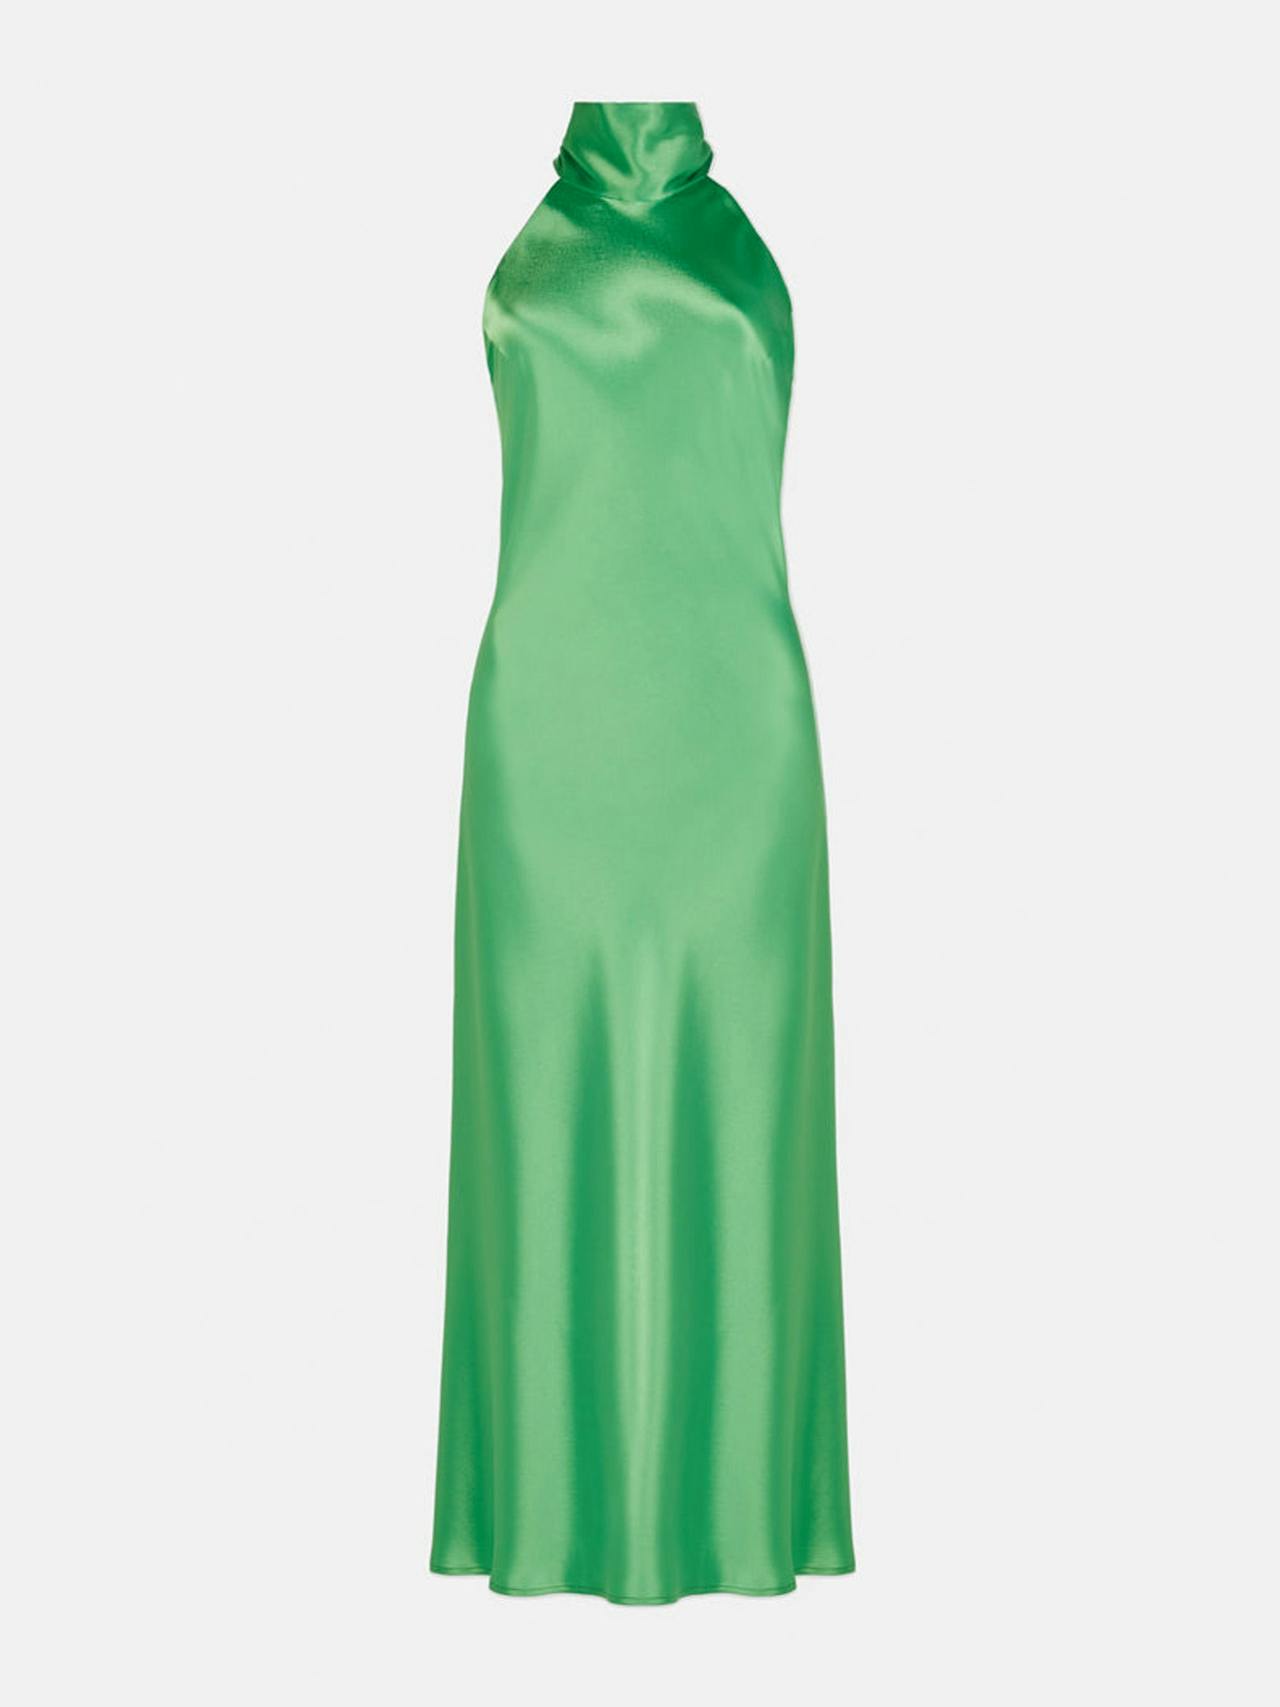 Paris green cropped Sienna dress